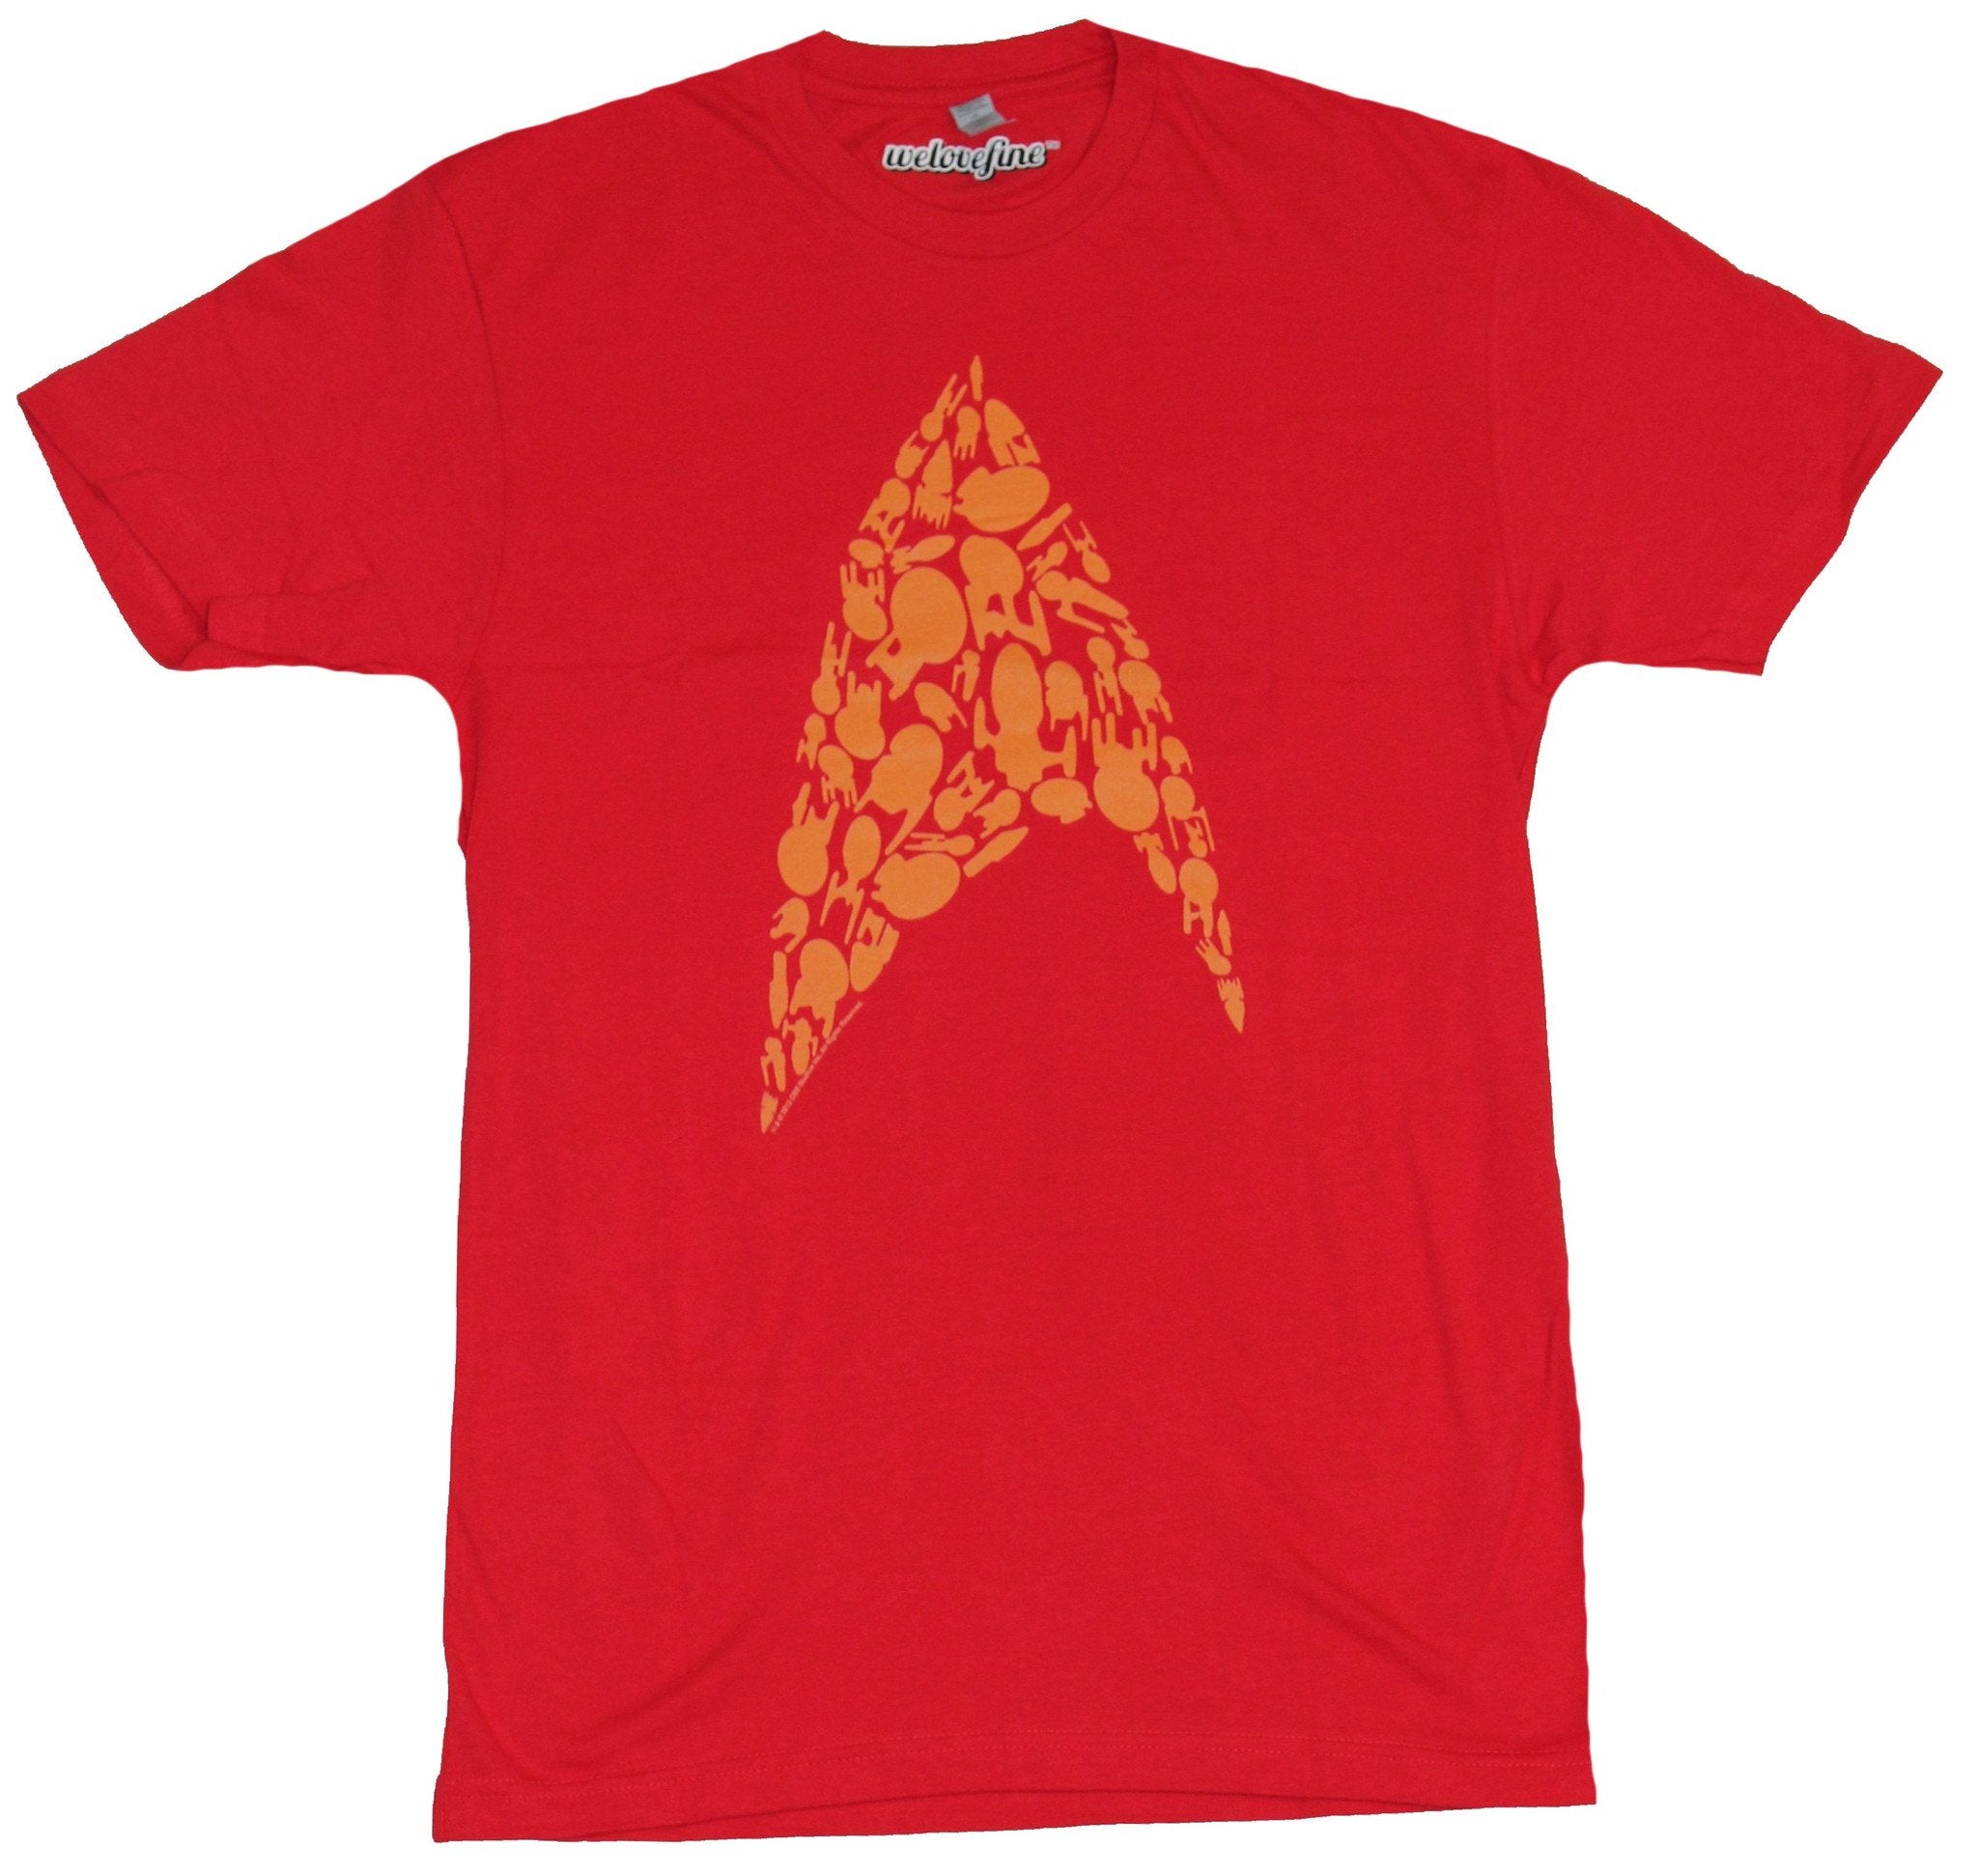 Star Trek Mens T-Shirt -Star Fleet logo Comprised of Show Images